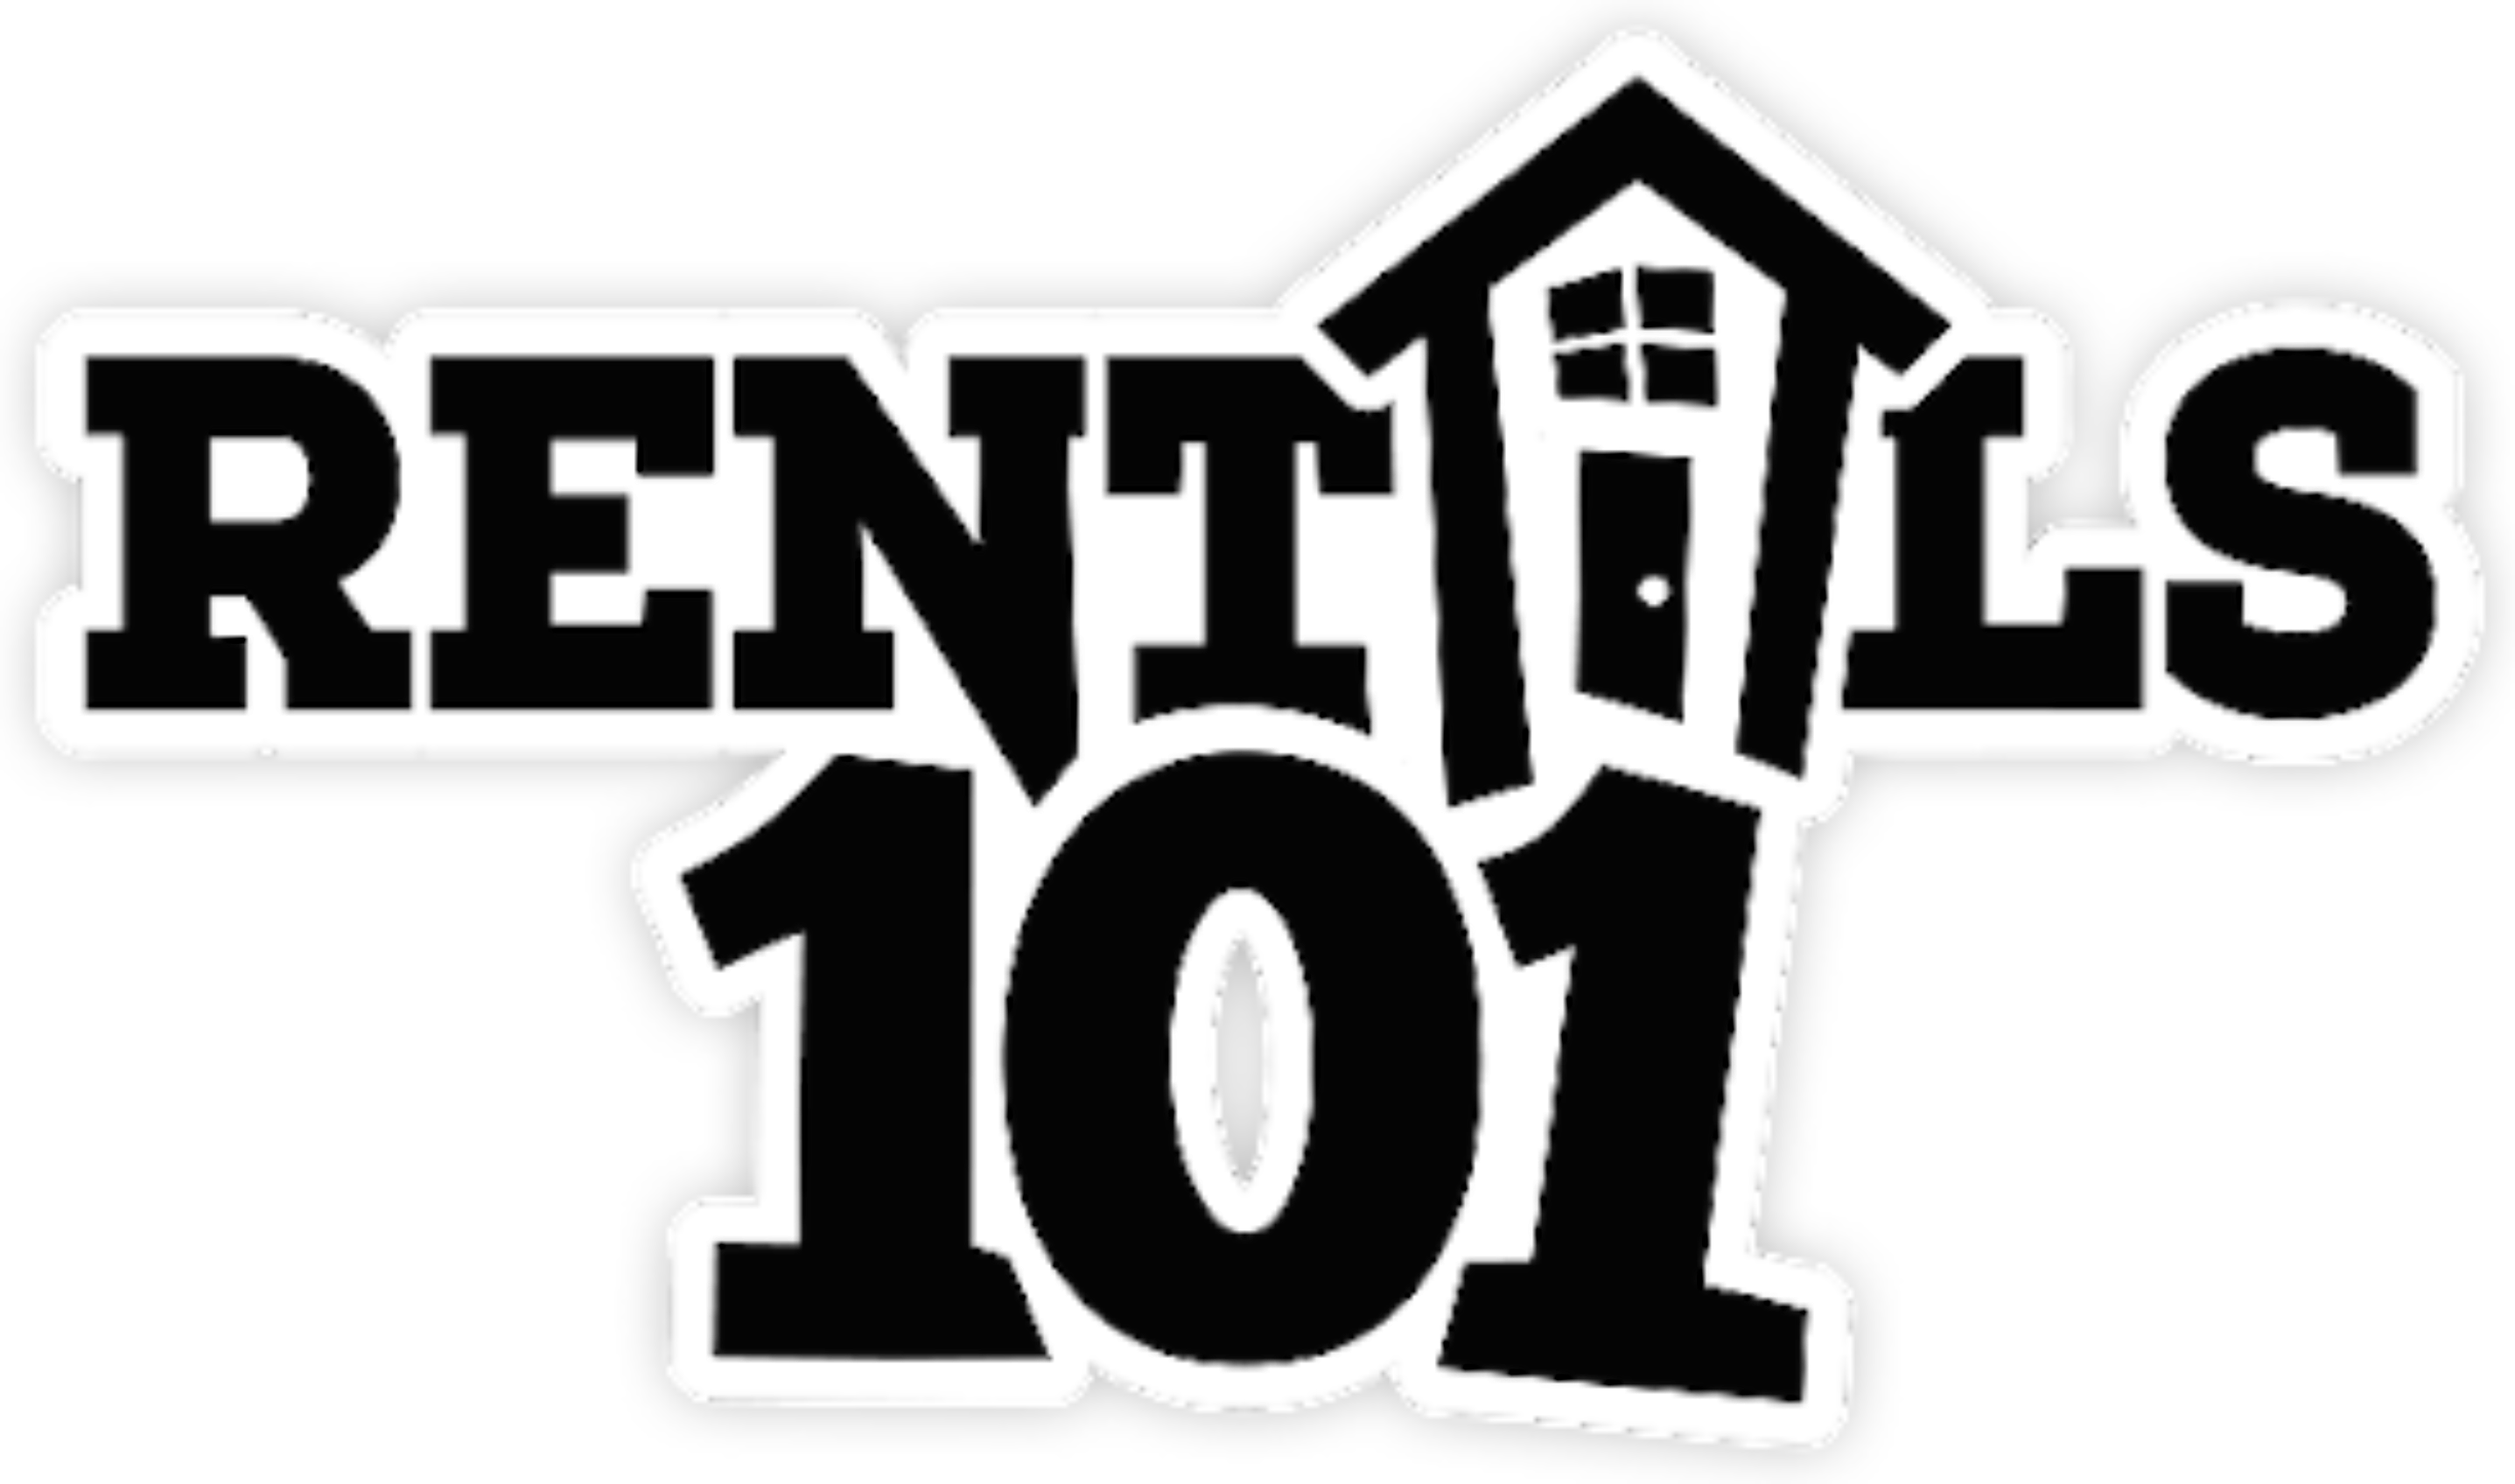 Rentals-101-logo-bw